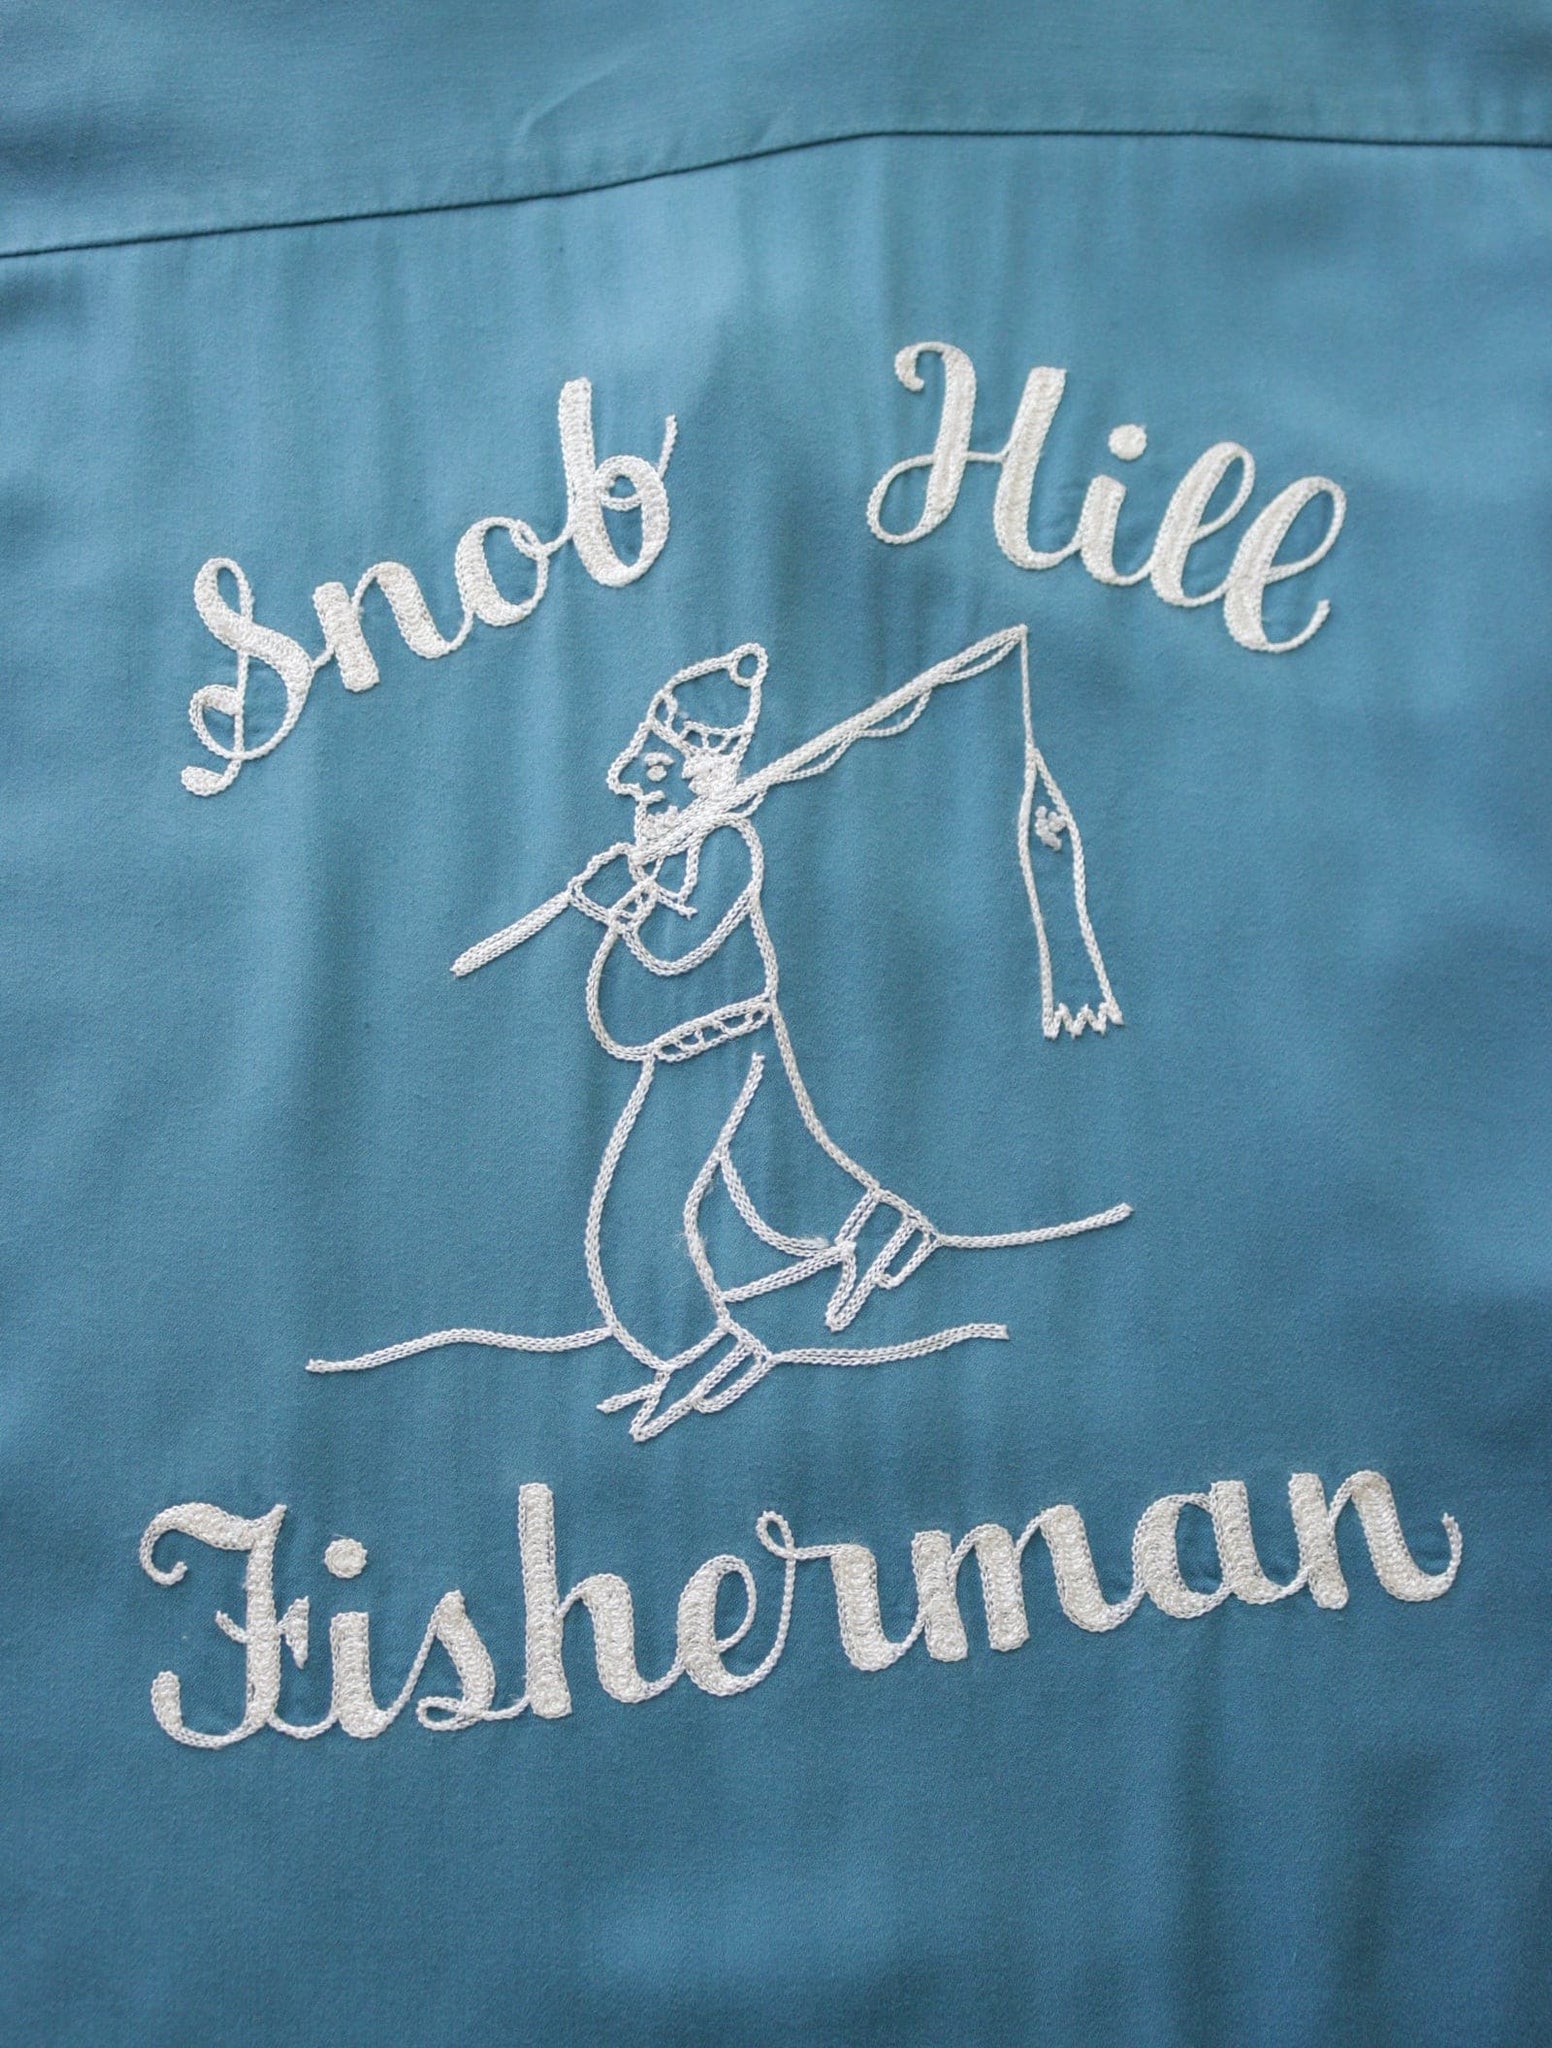 1940S SNOB HILL FISHERMAN CHAINSTITCH BOWLING SHIRT